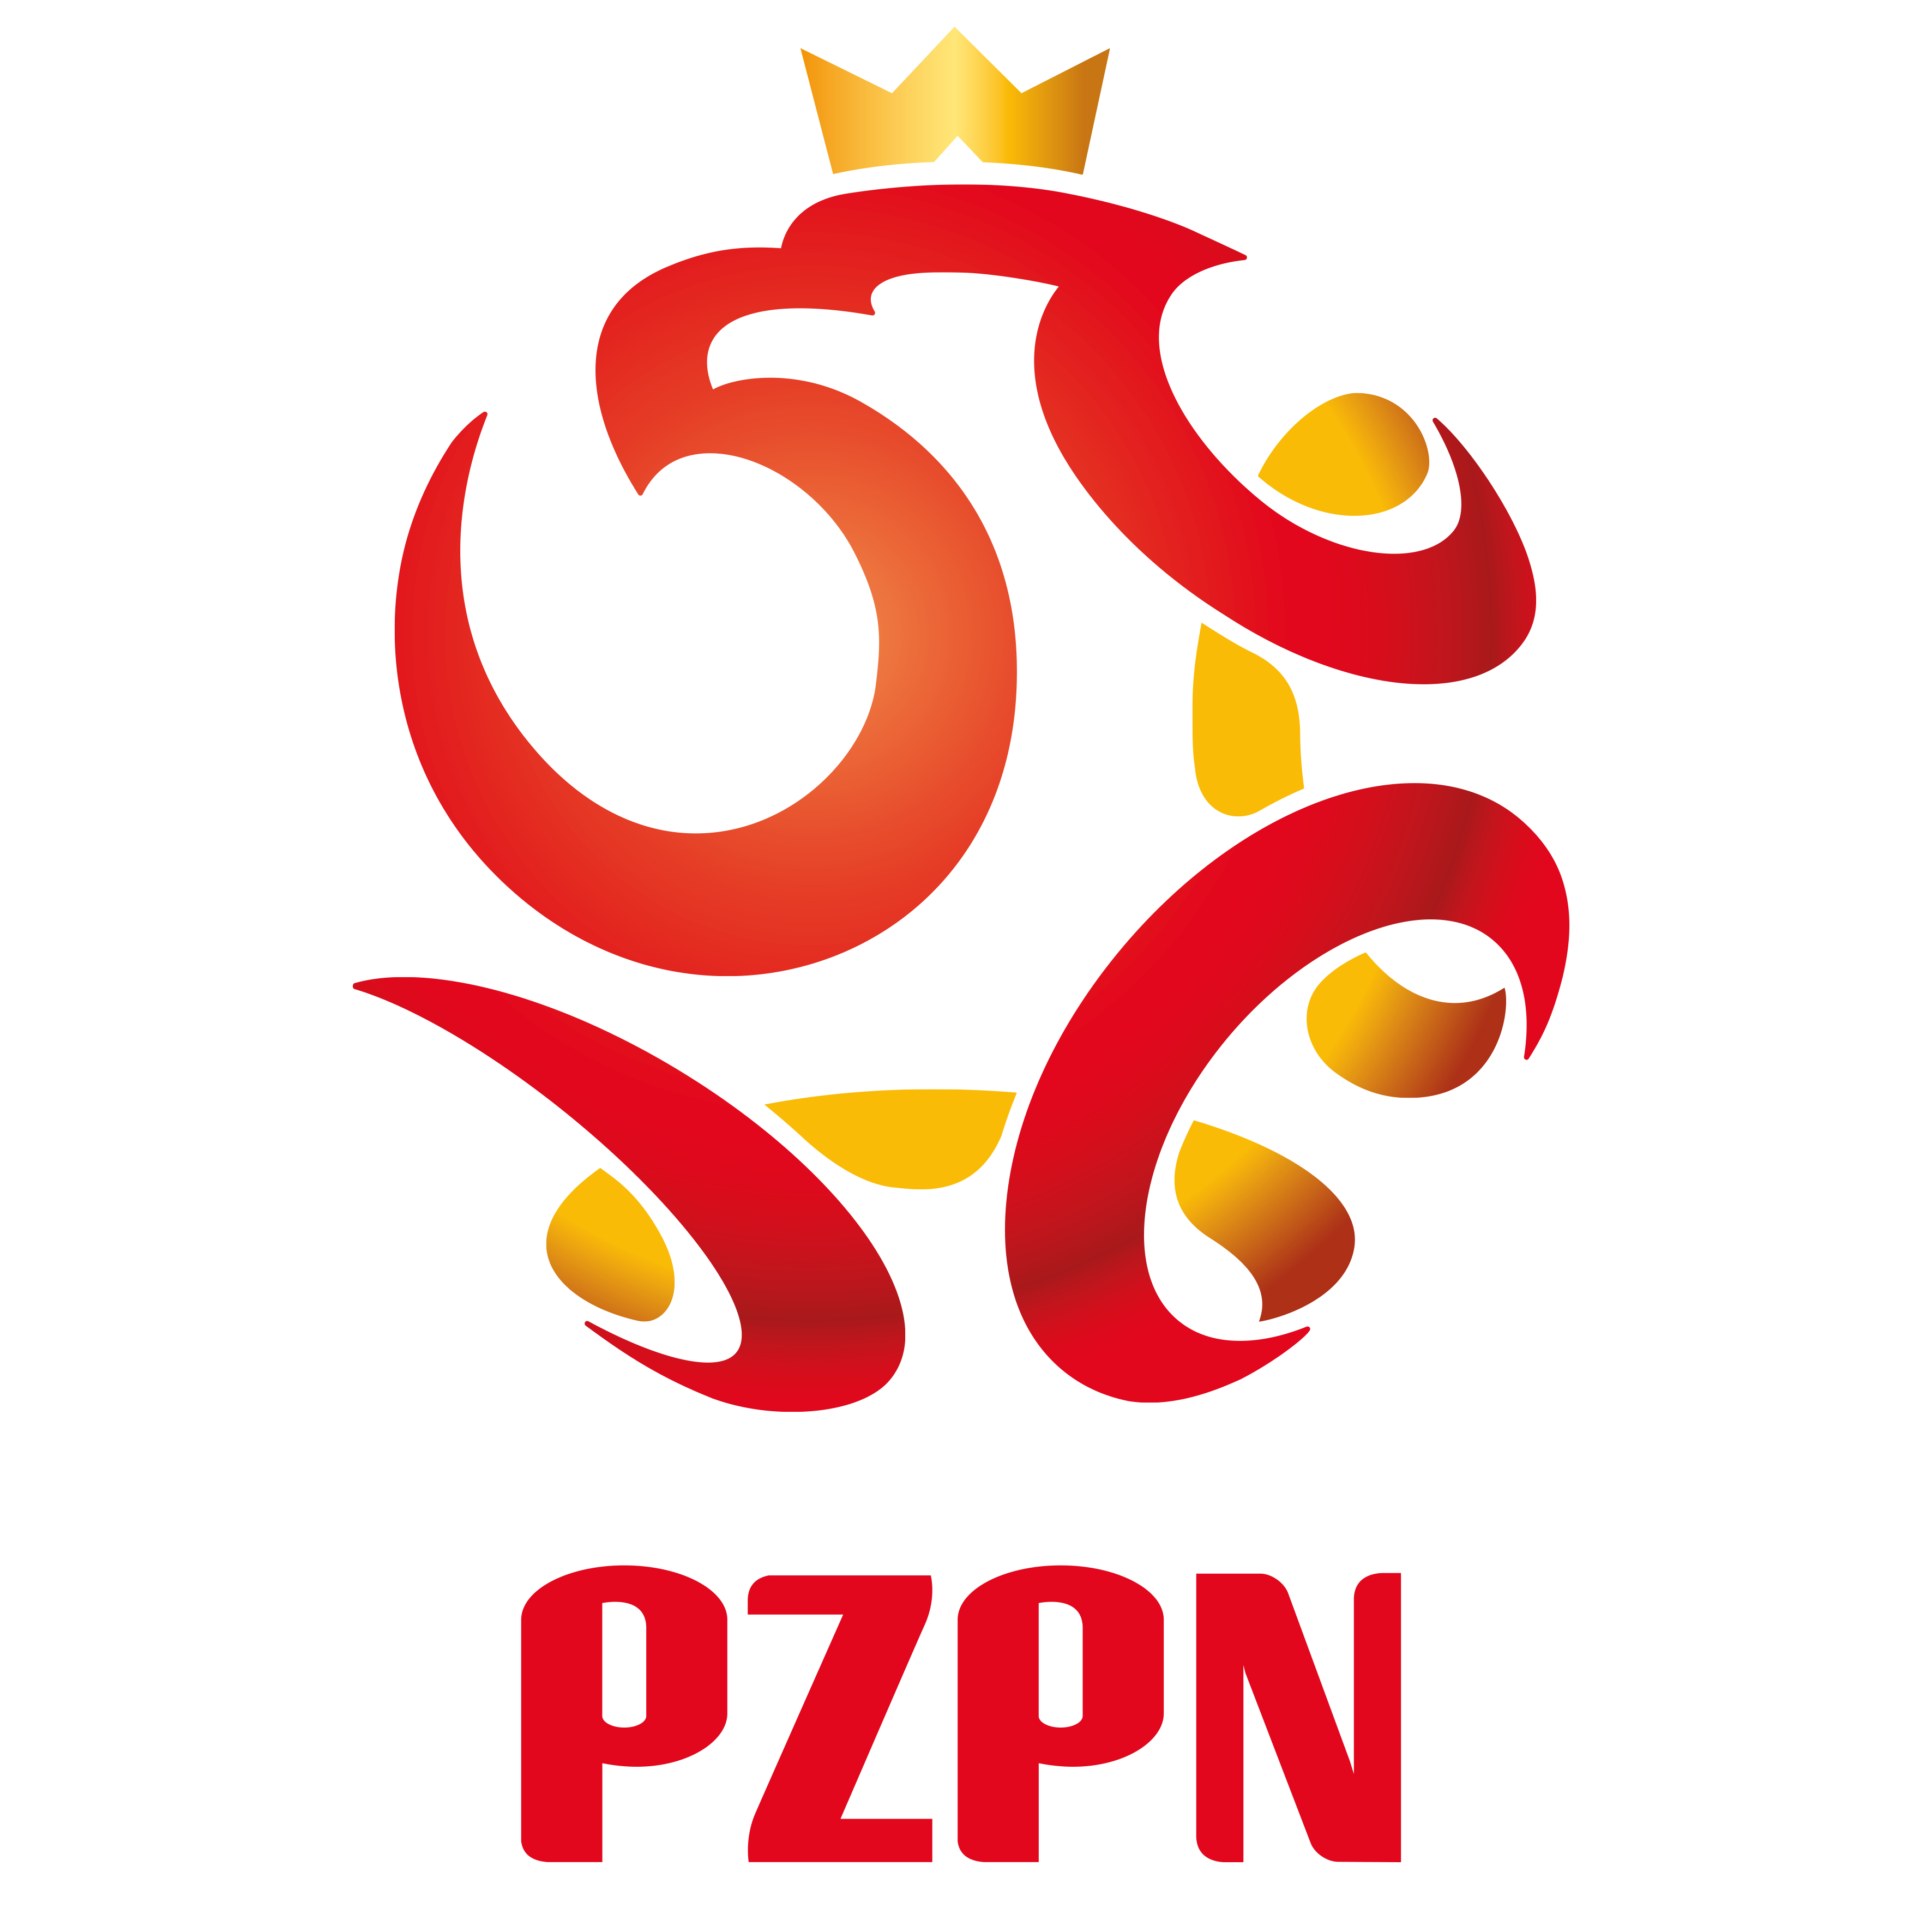 2719 pzpn logo on white background